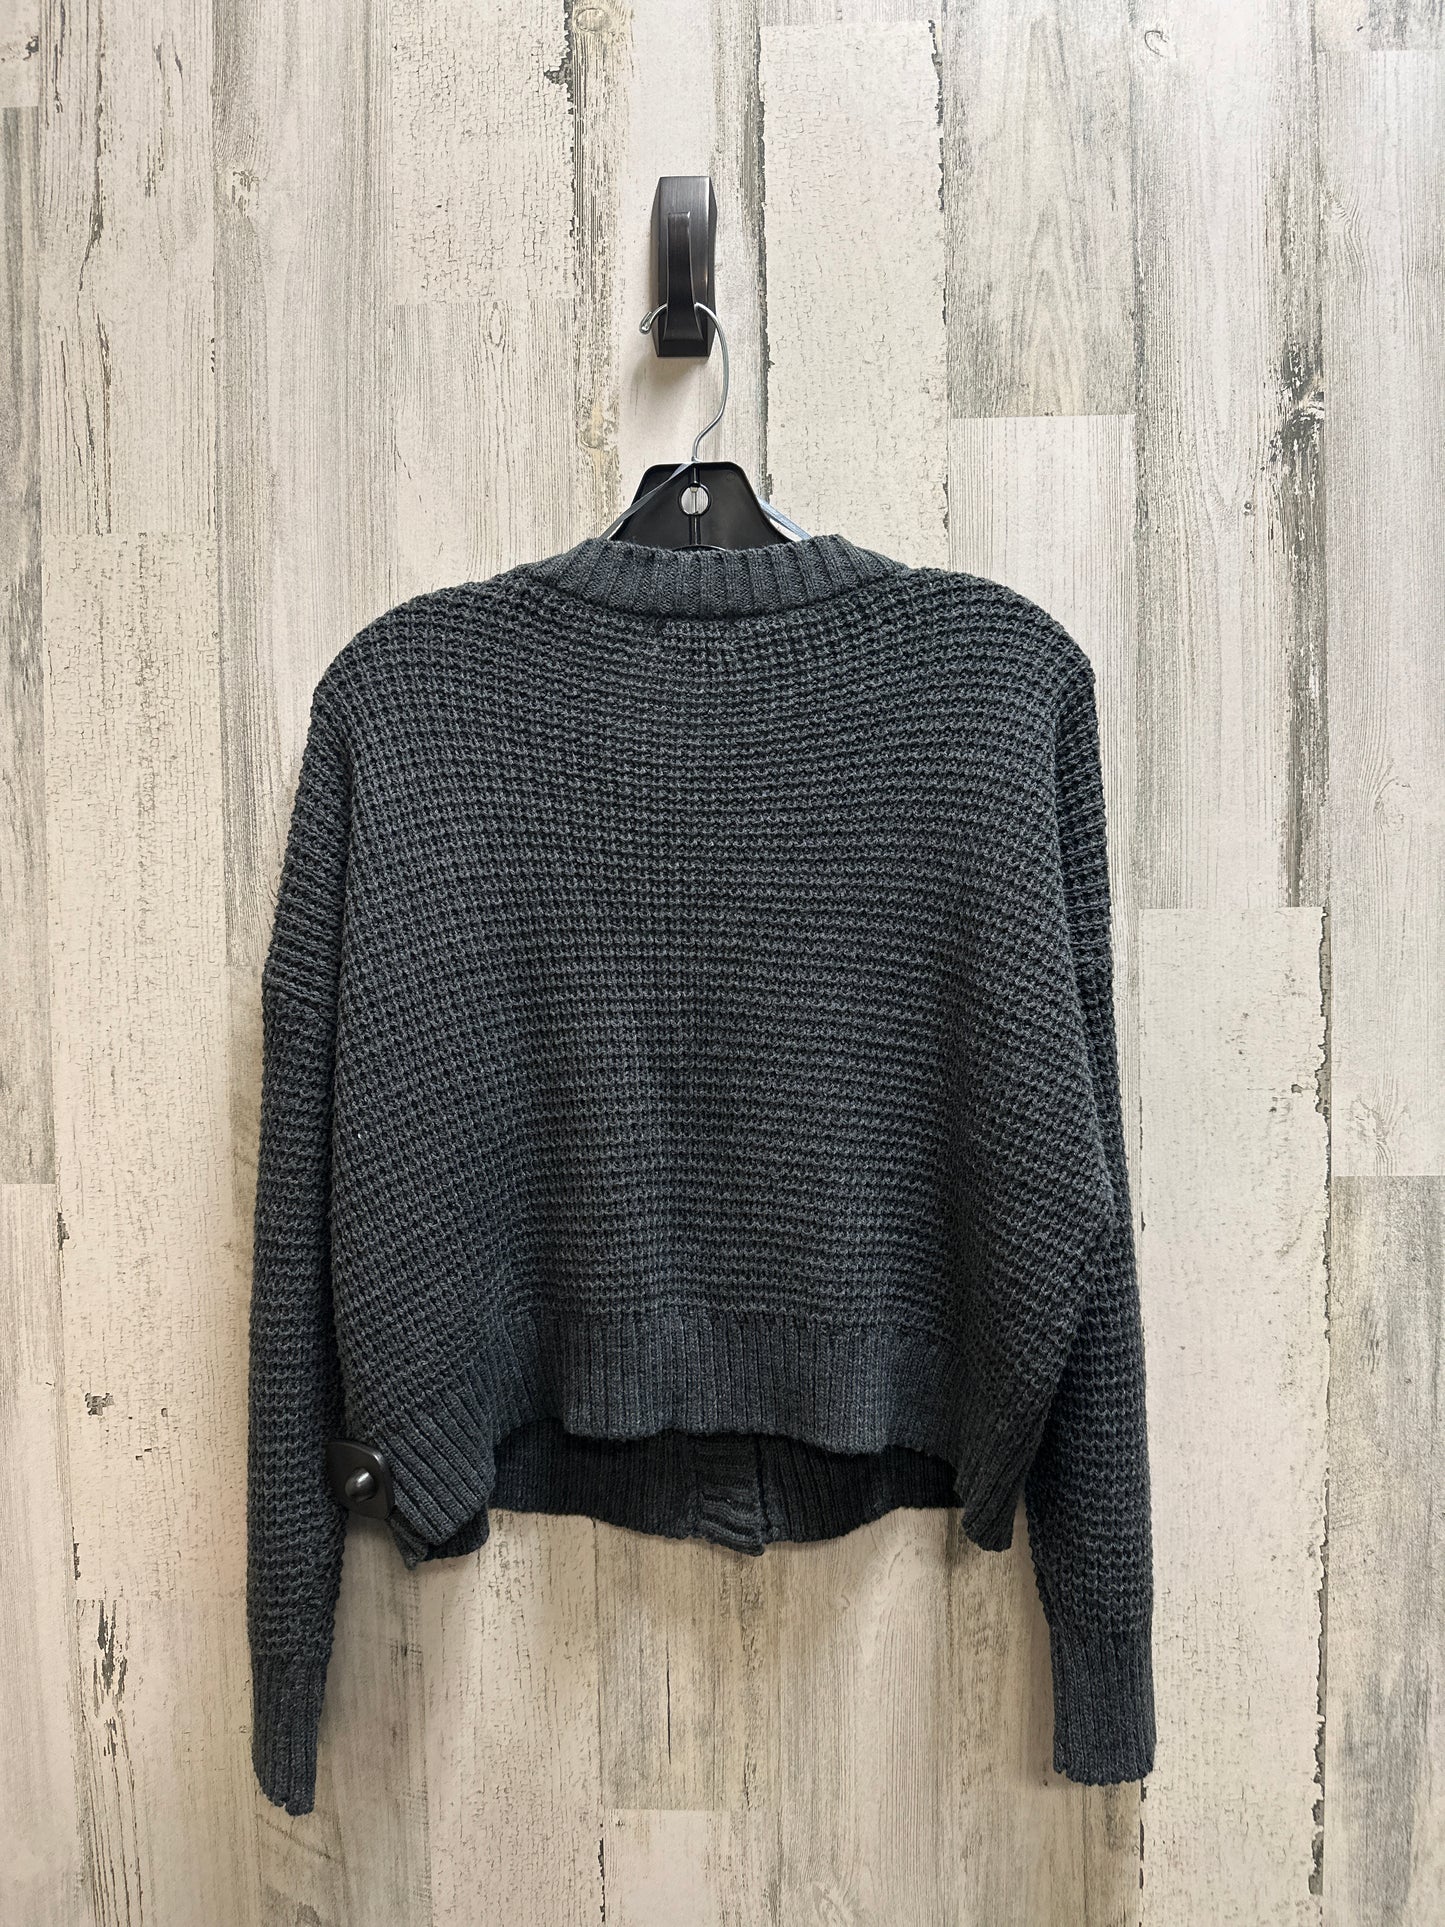 Sweater Cardigan By Ultra Flirt  Size: M